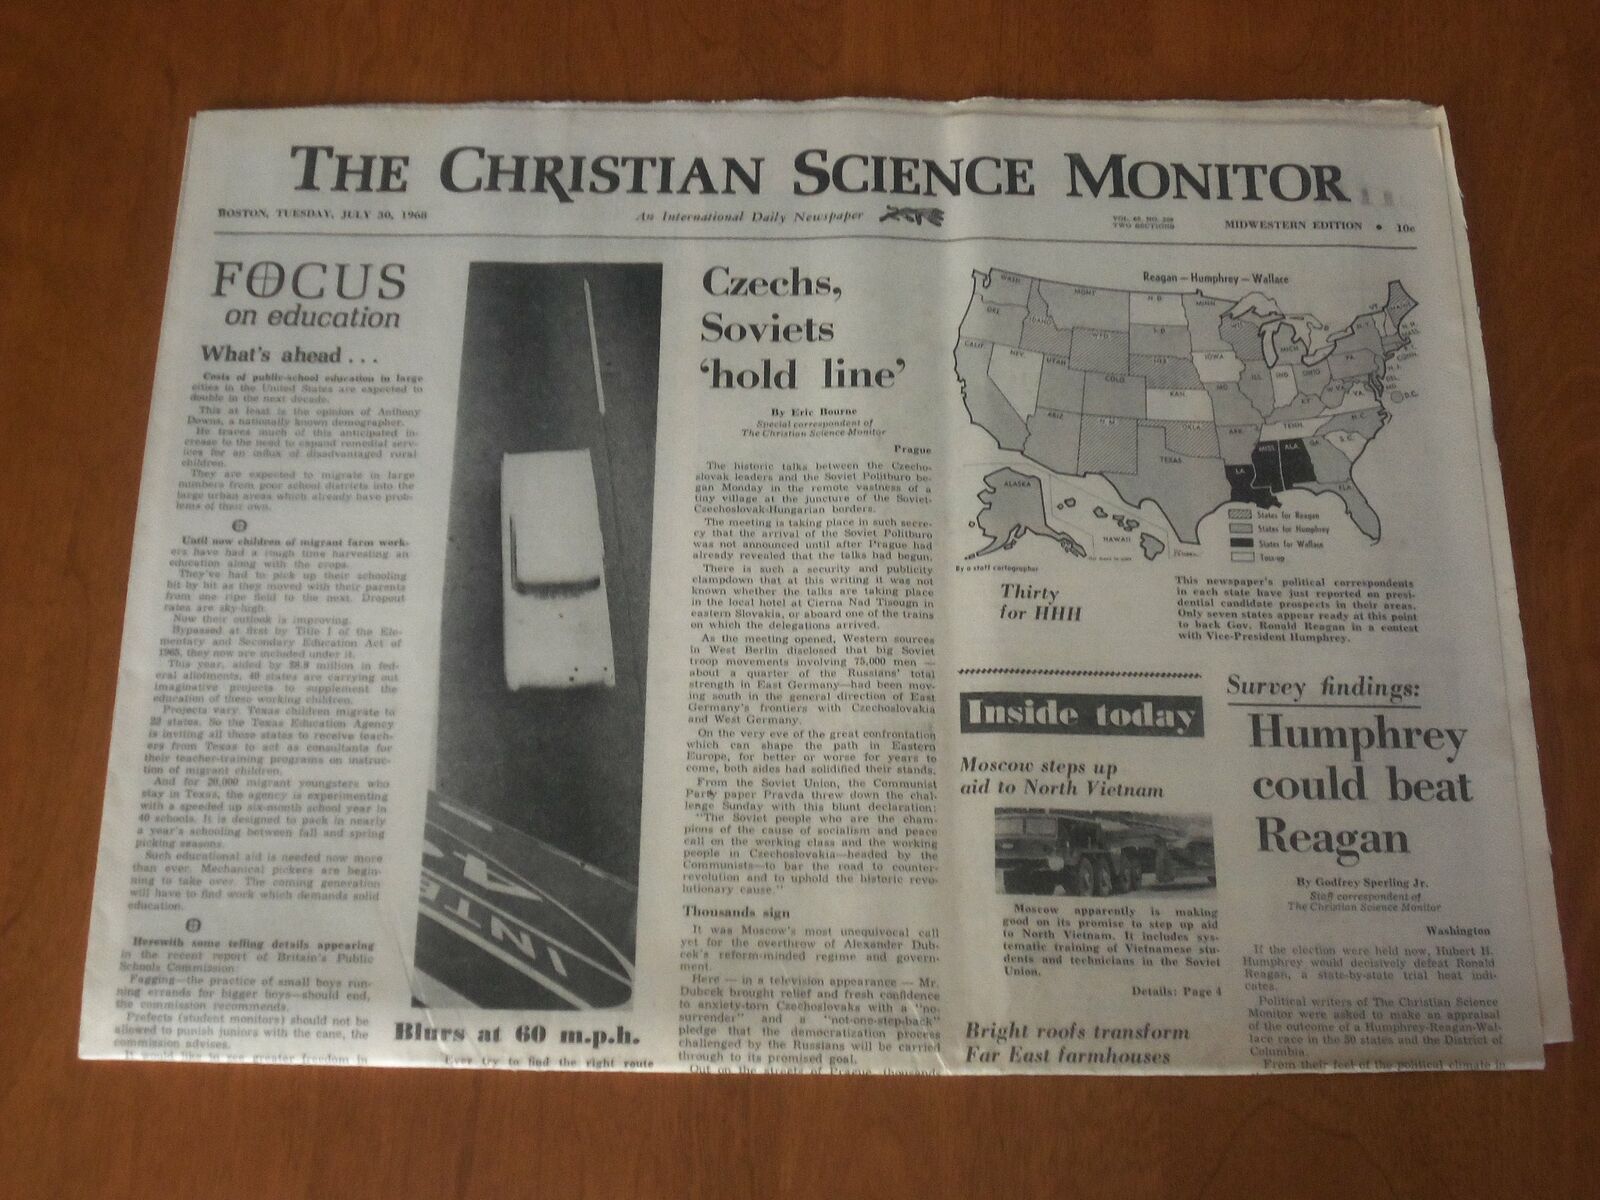 1968 JULY 30 THE CHRISTIAN SCIENCE MONITOR - HUMPHREY COULD BEAT REAGAN- NP 4668